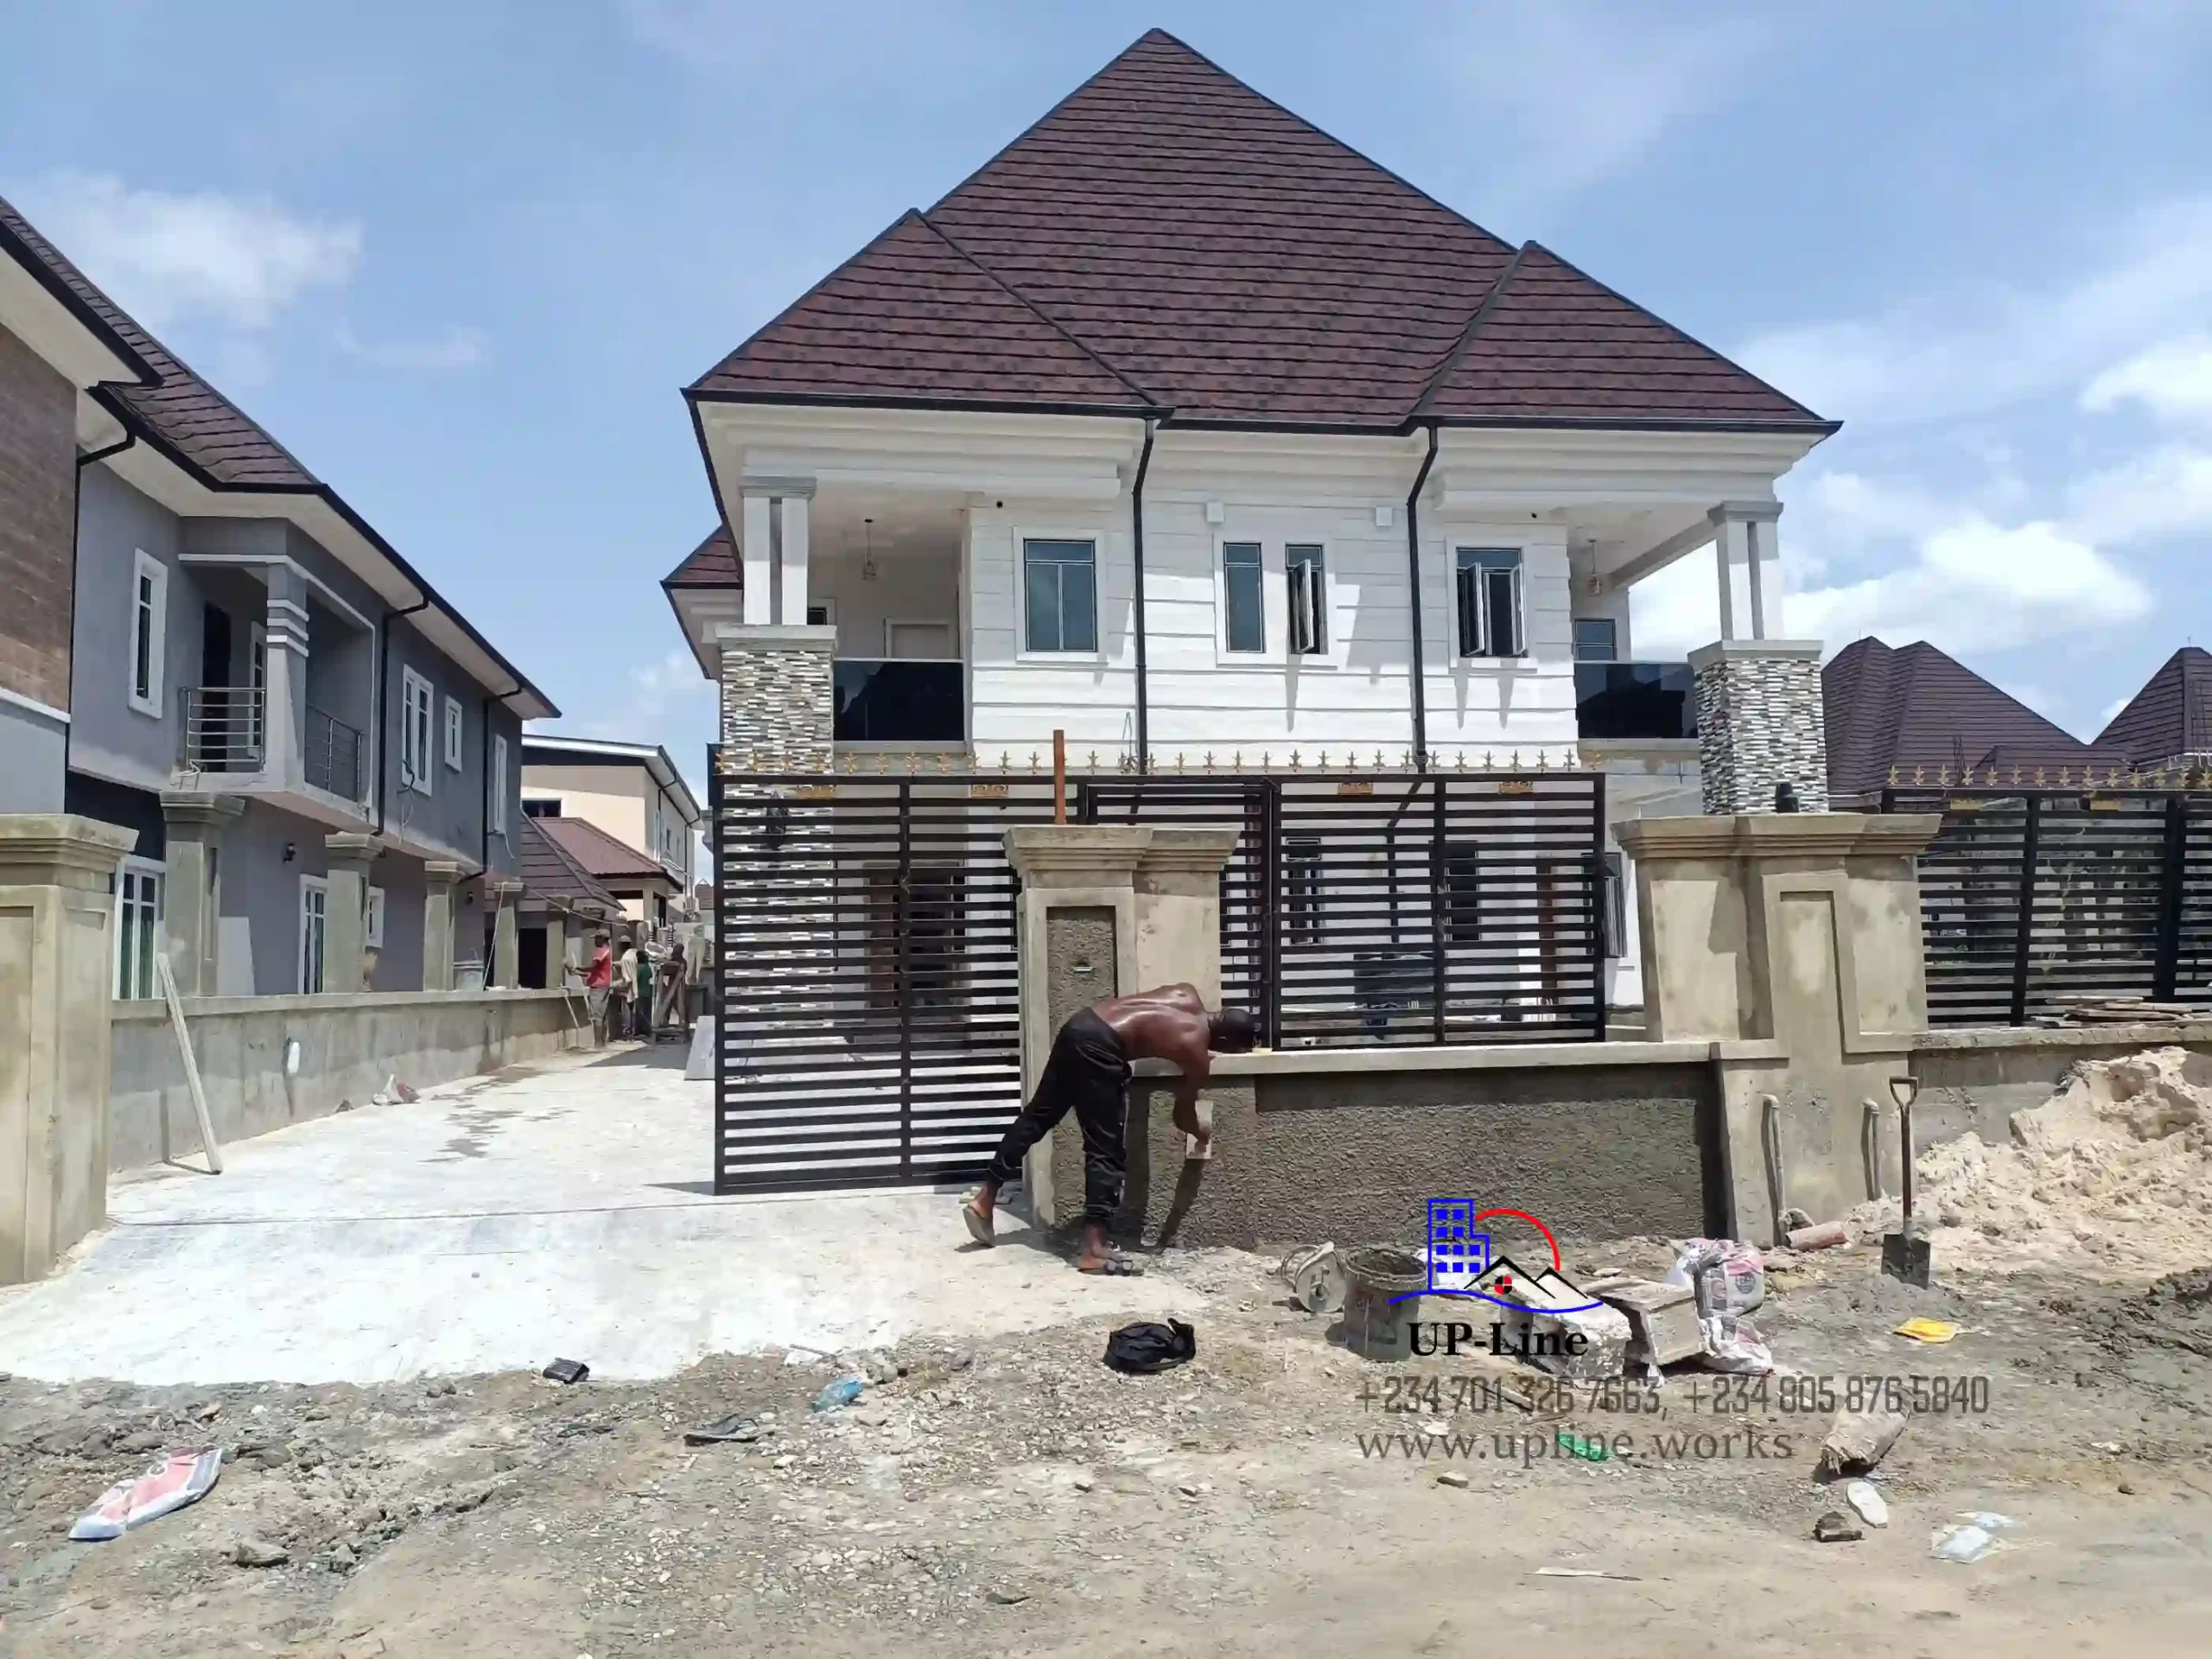 4 Bedroom duplex house plans in Nigeria